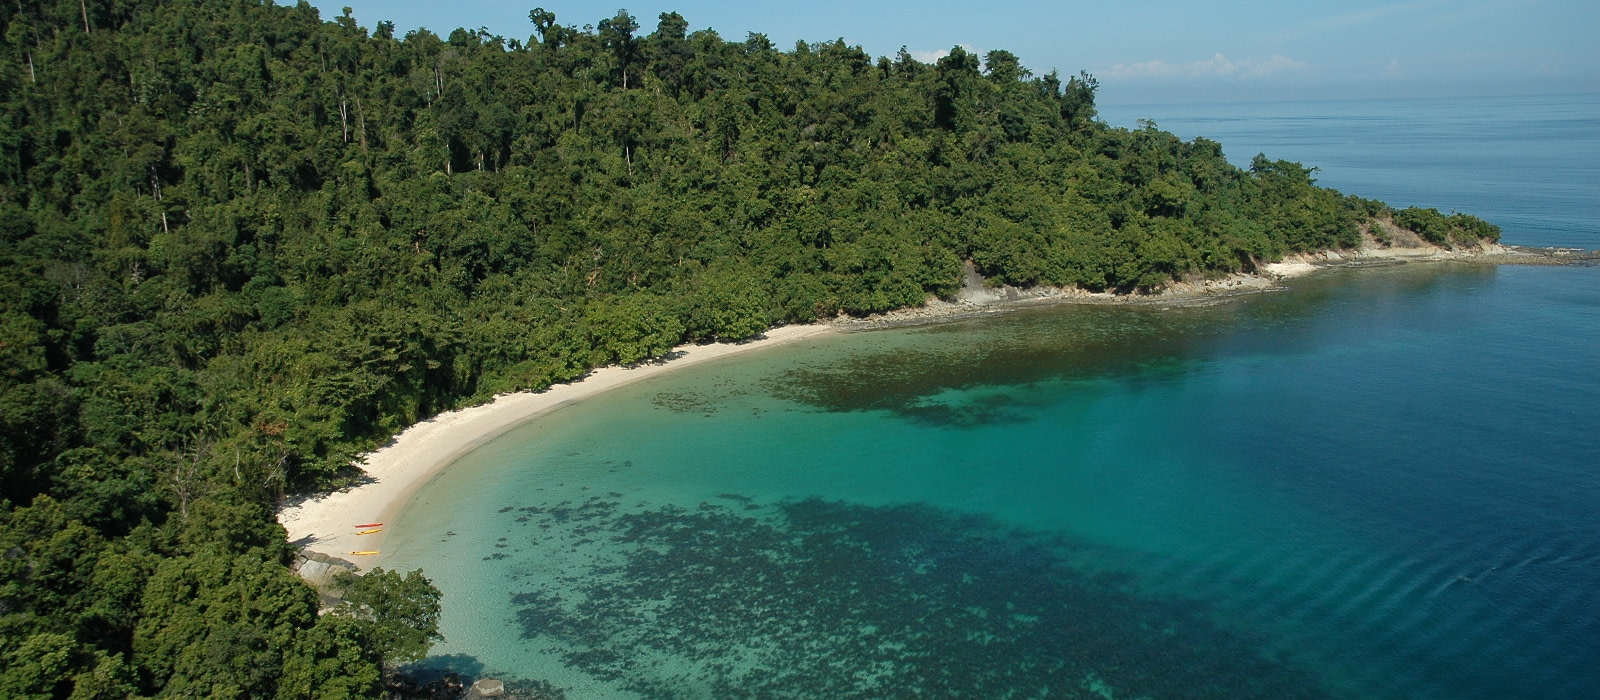 Остров калимантан 6. Остров Калимантан. Борнео остров. Кота-Кинабалу, остров Борнео. Калимантан архипелаги.